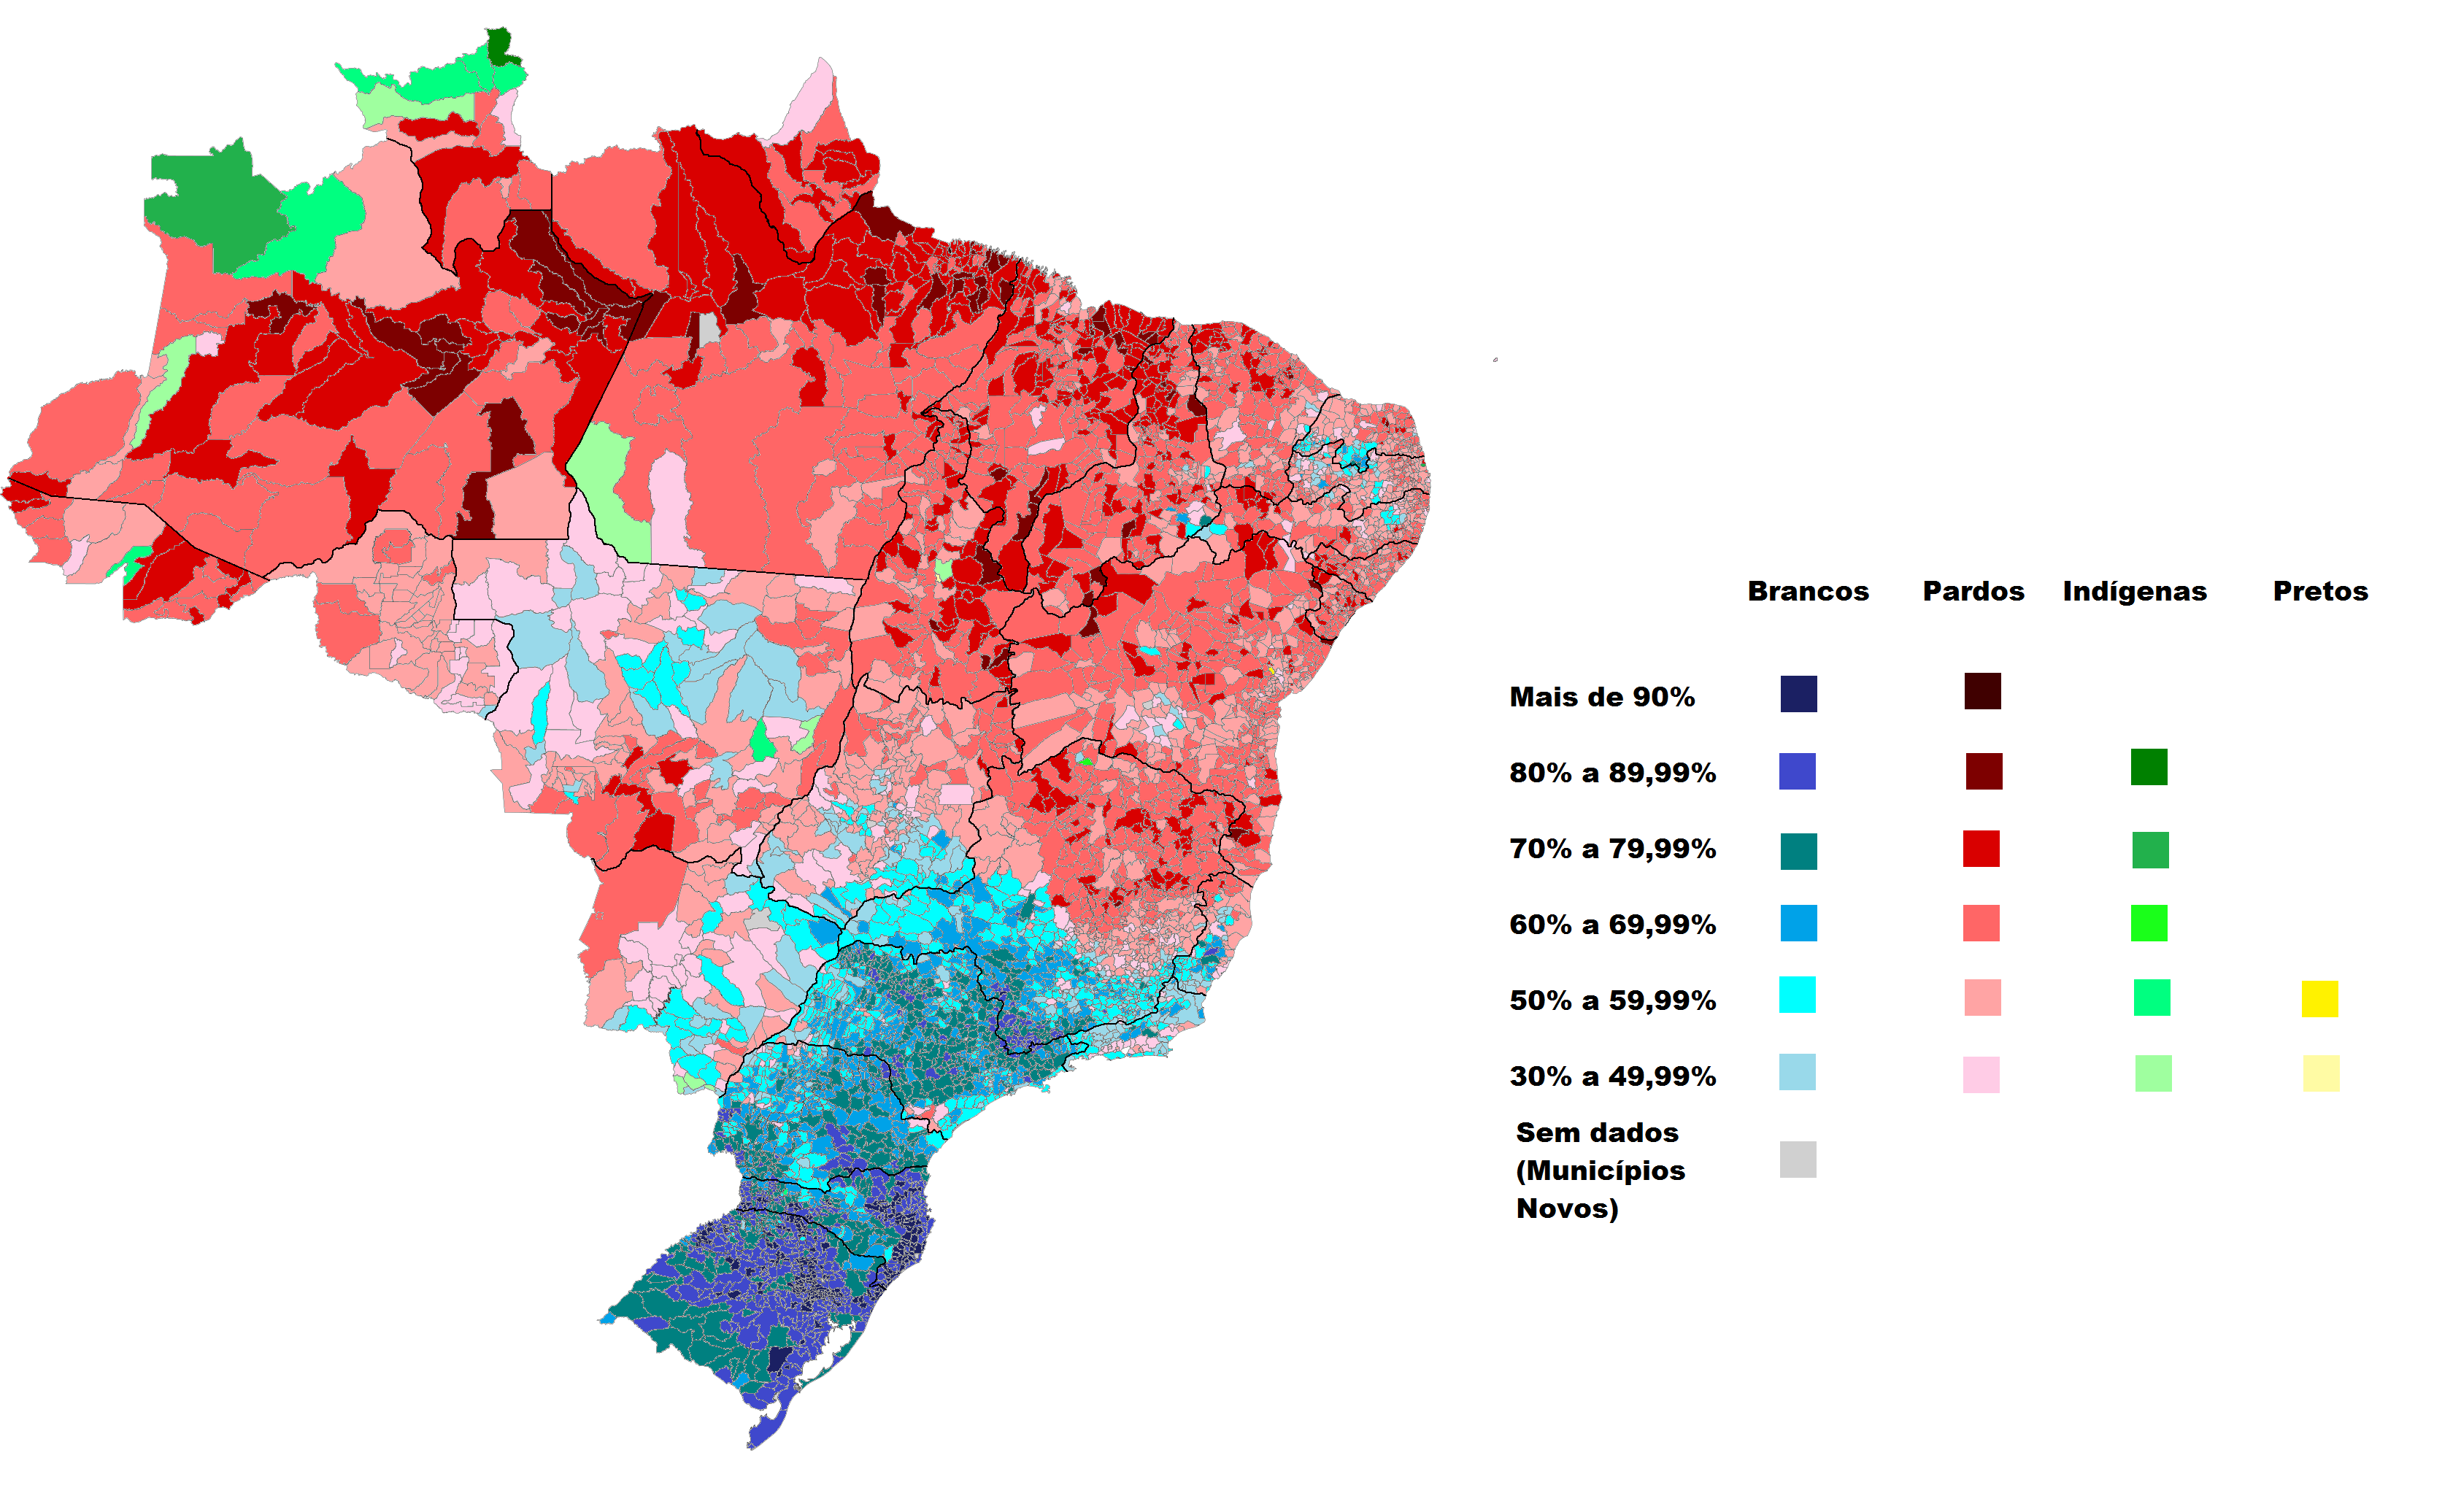 Munic%C3%ADpios_do_Brasil_-_Grupos_%C3%A9tnico-raciais_predominantes.png